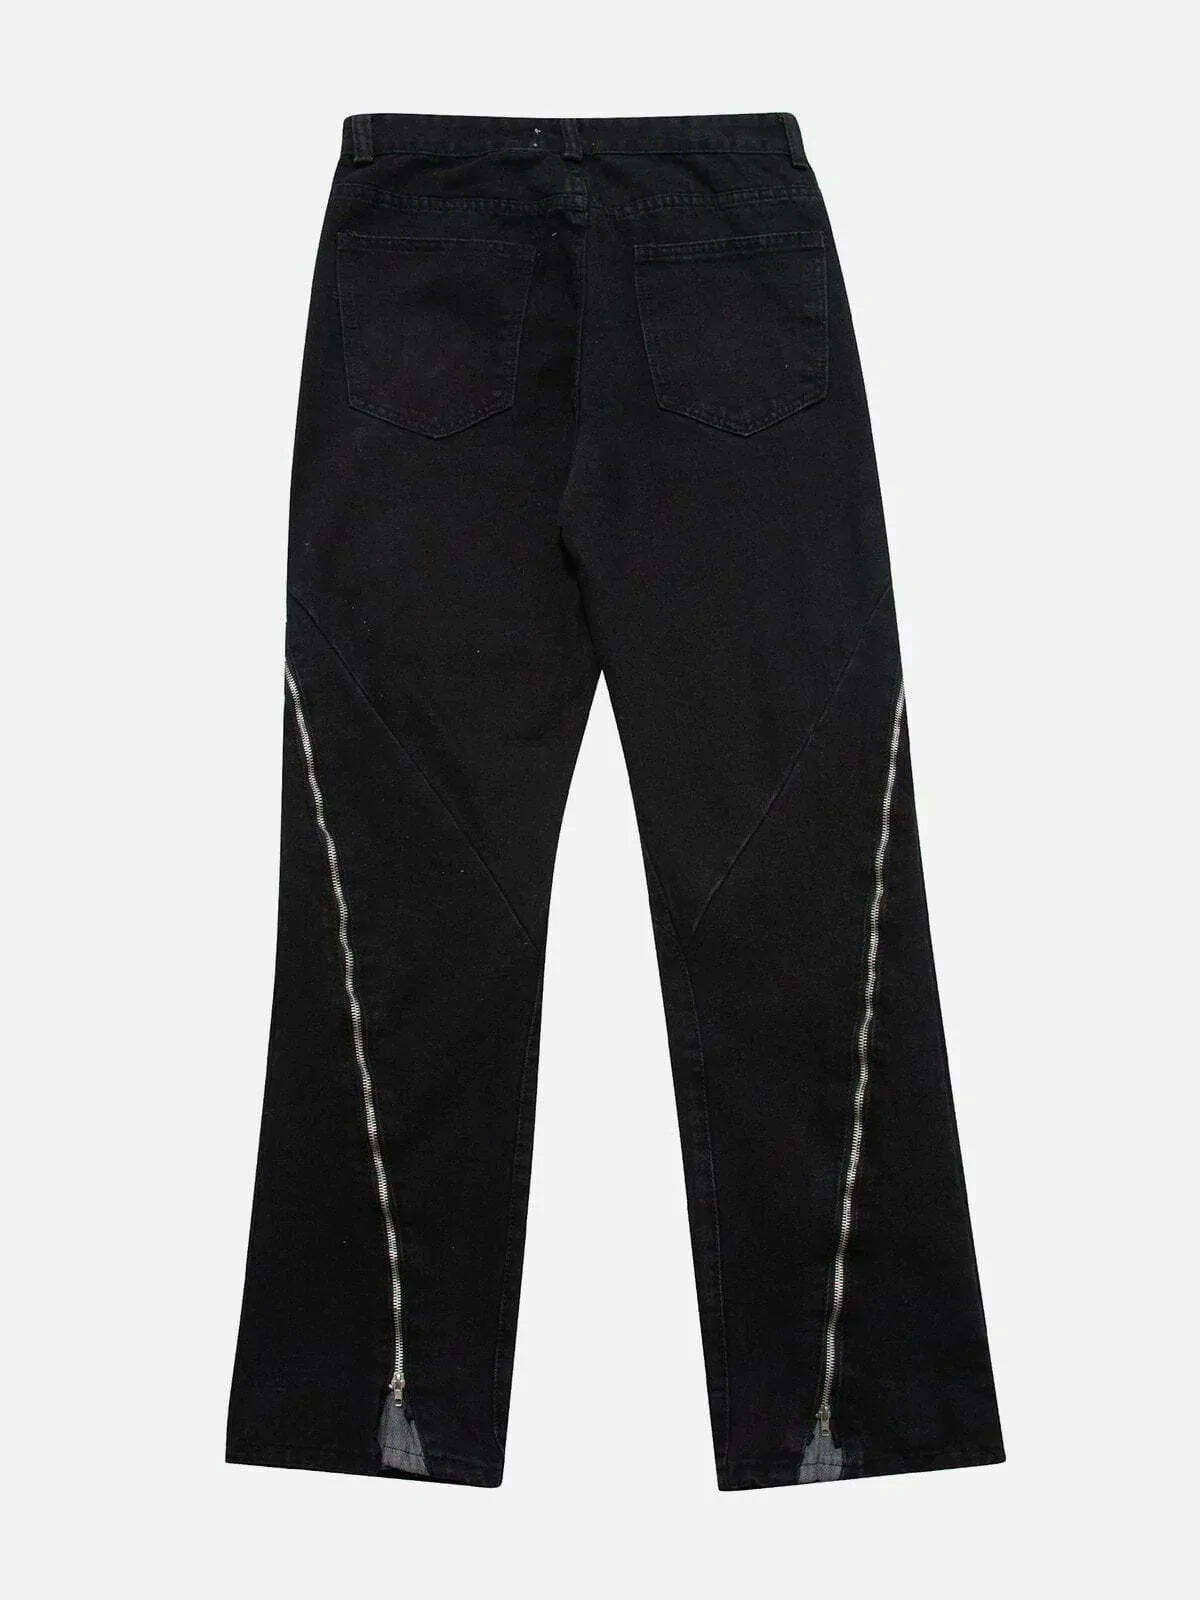 retro wash zip jeans adjustable fit & vintage vibes 8186